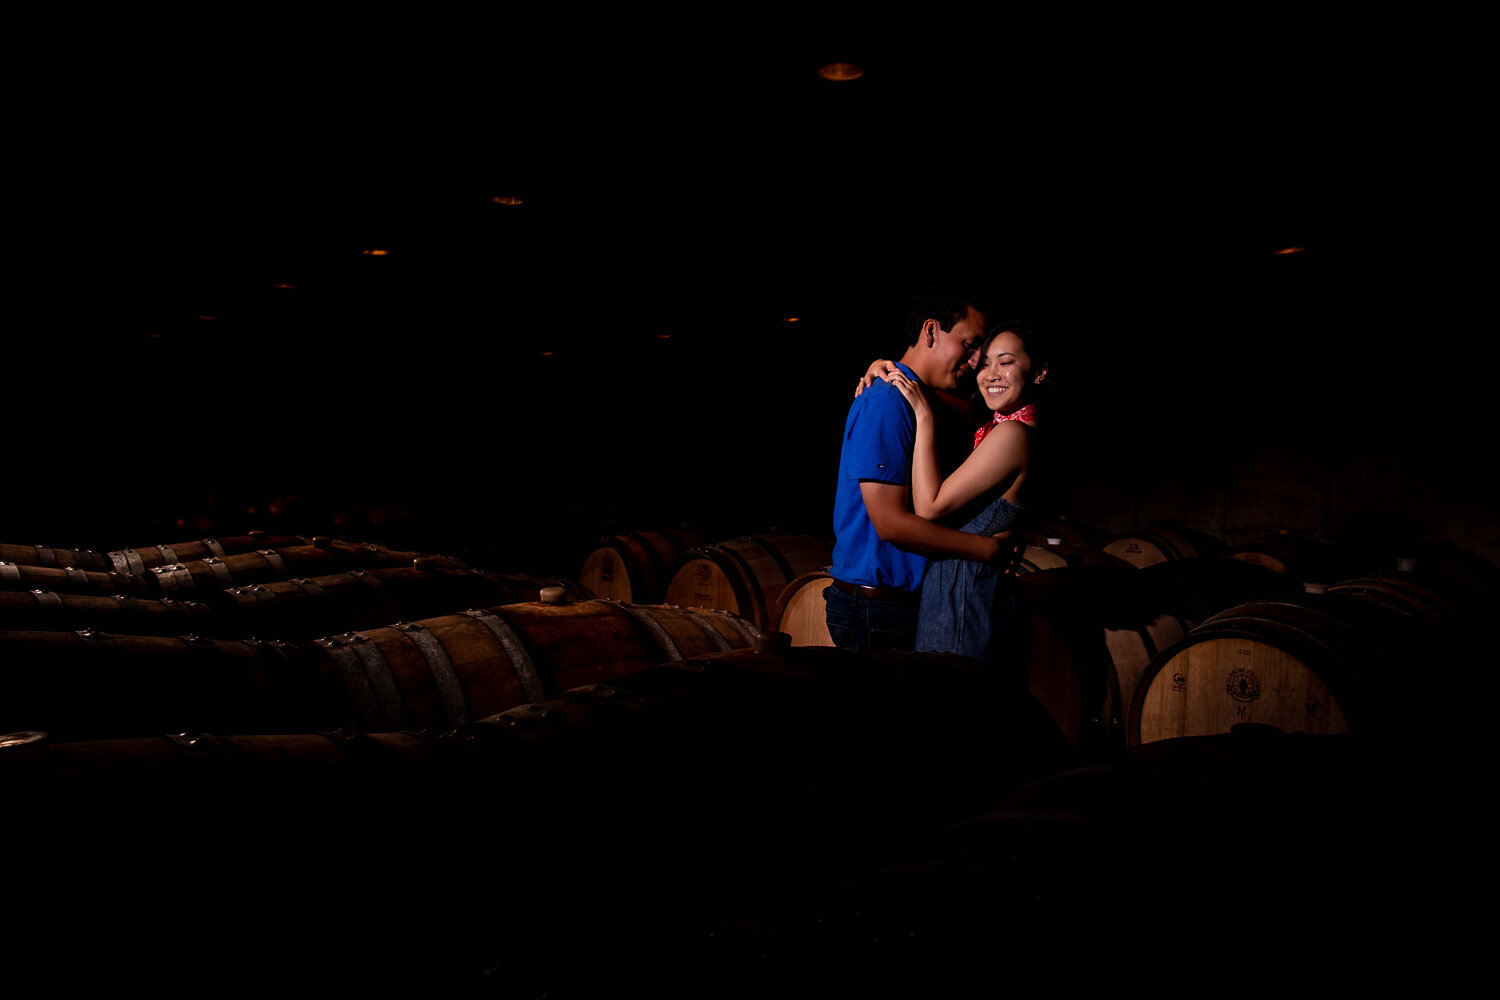 Winery-engagement-photos-4.jpg